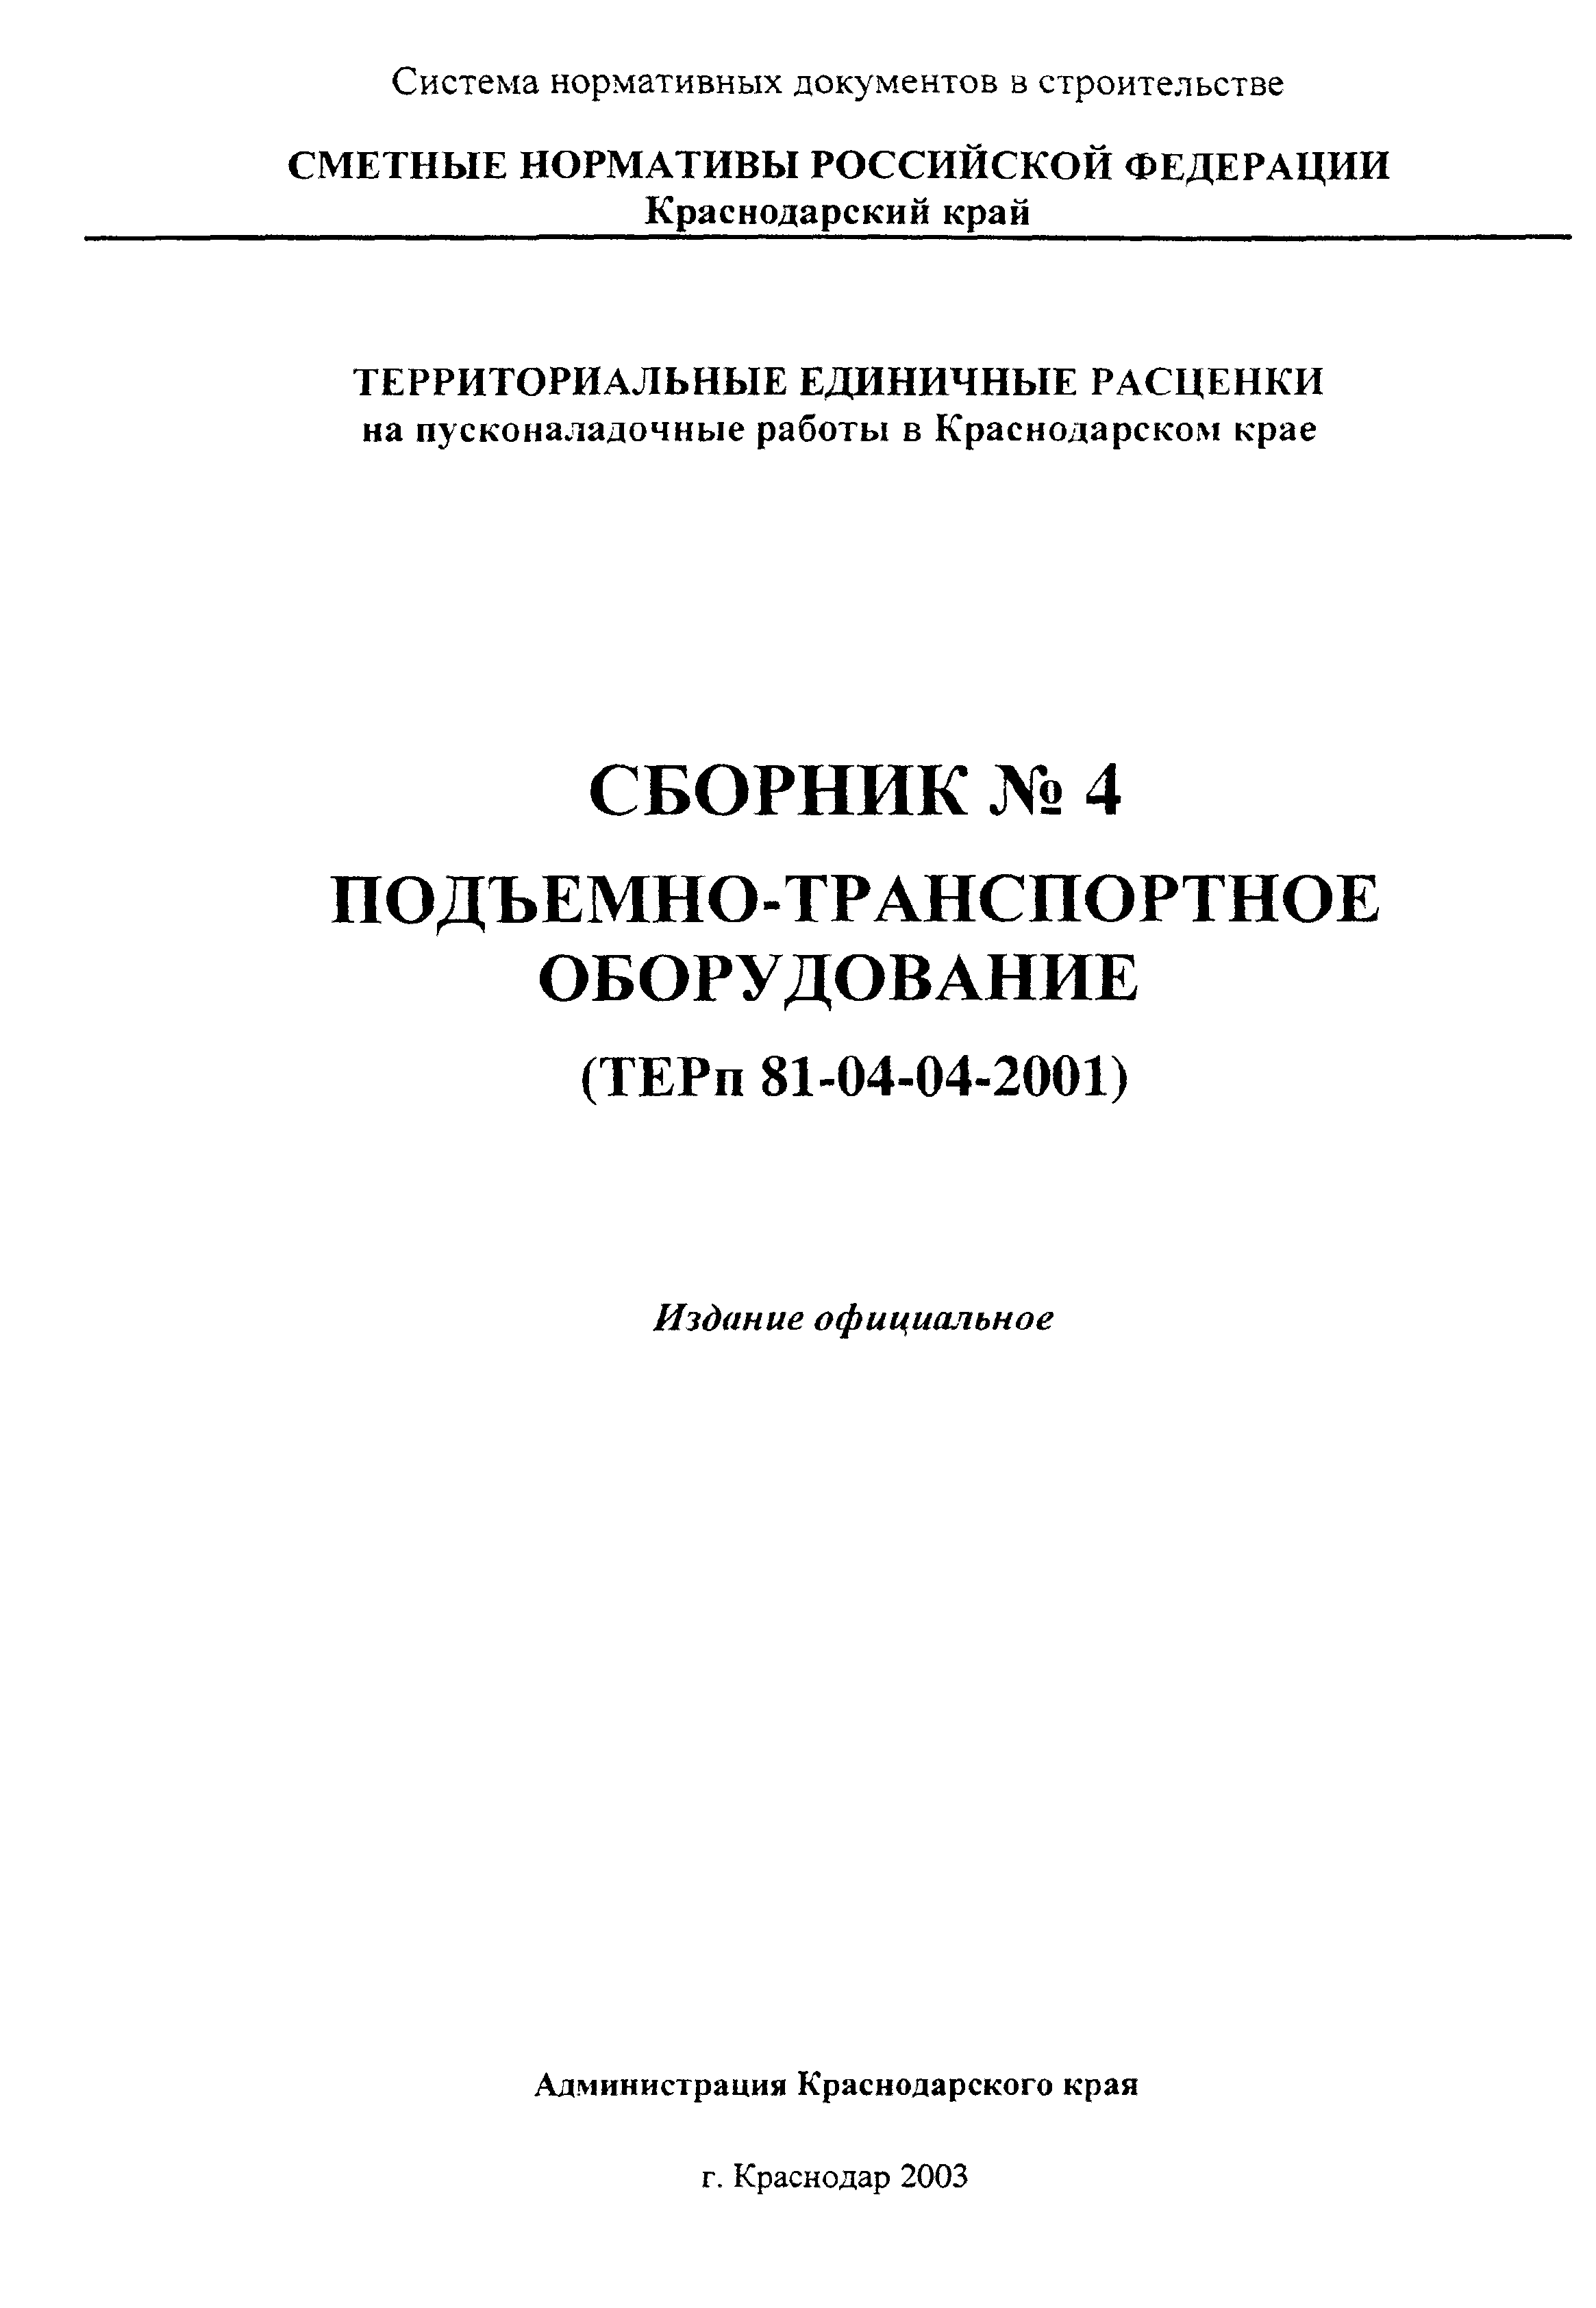 ТЕРп Краснодарский край 2001-04